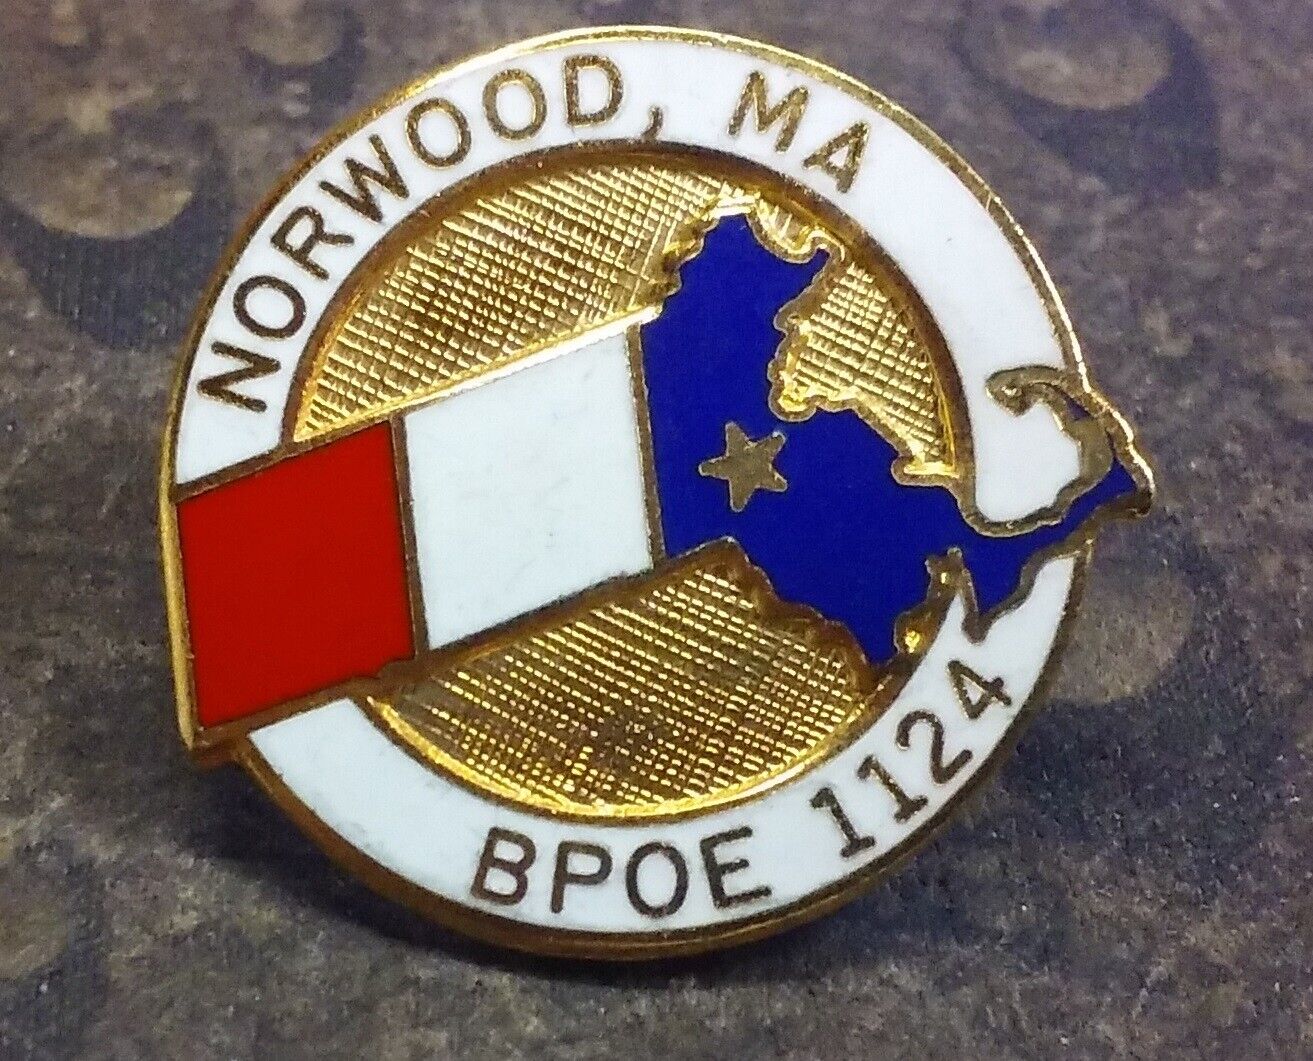 Norwood Massachusetts BPOE Elks Lodge 1124 pin badge